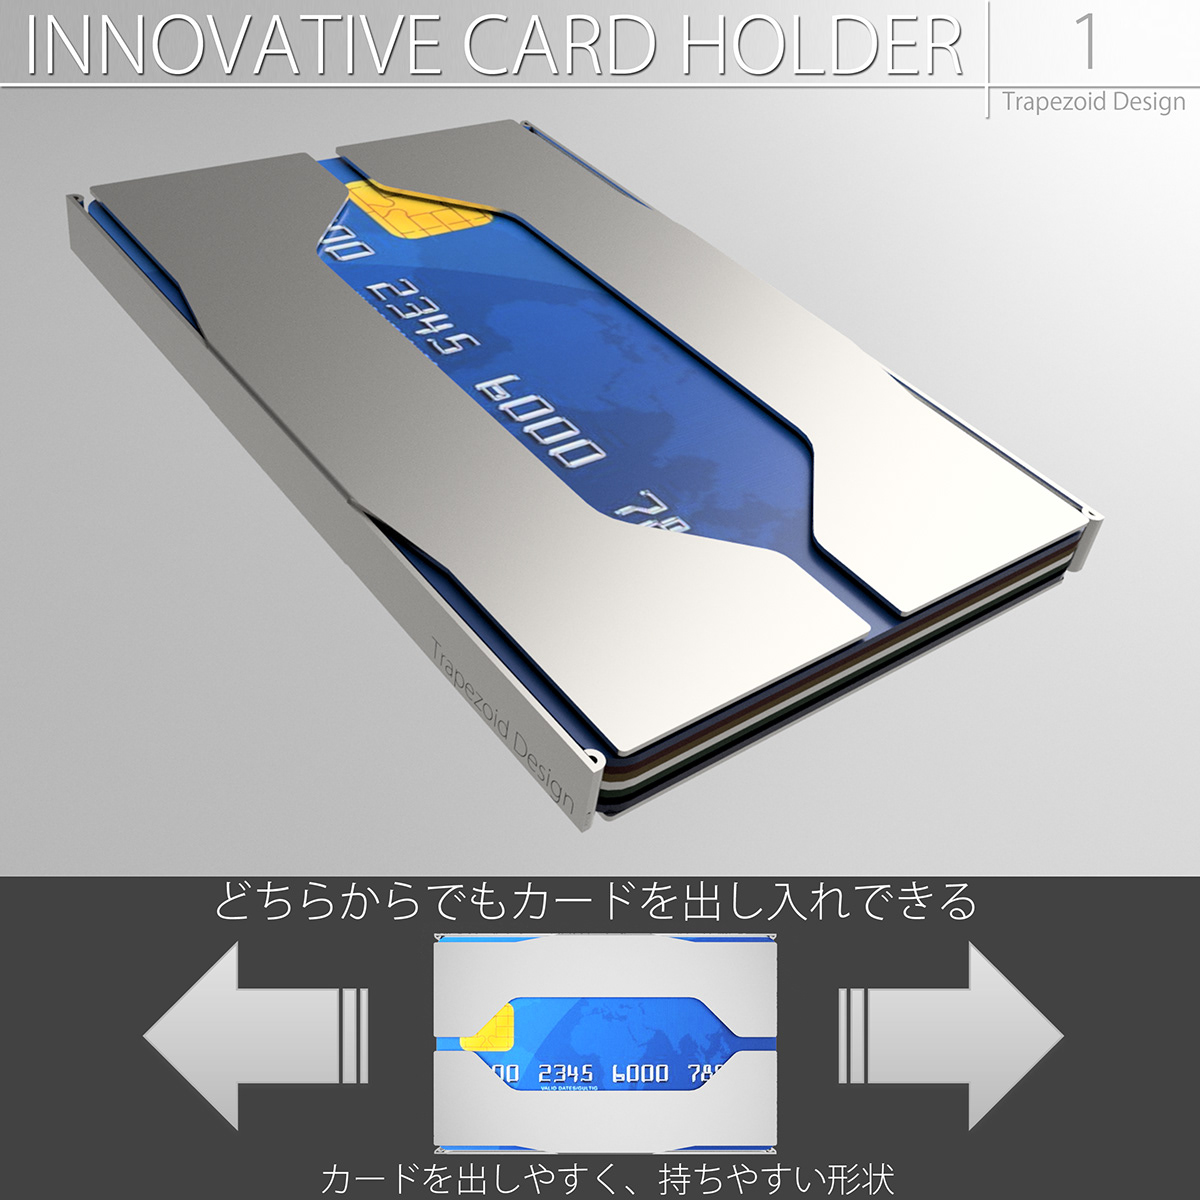 CARD HOLDER + MONEY CLIP DESIGN metal sheet simple modern luxury purse